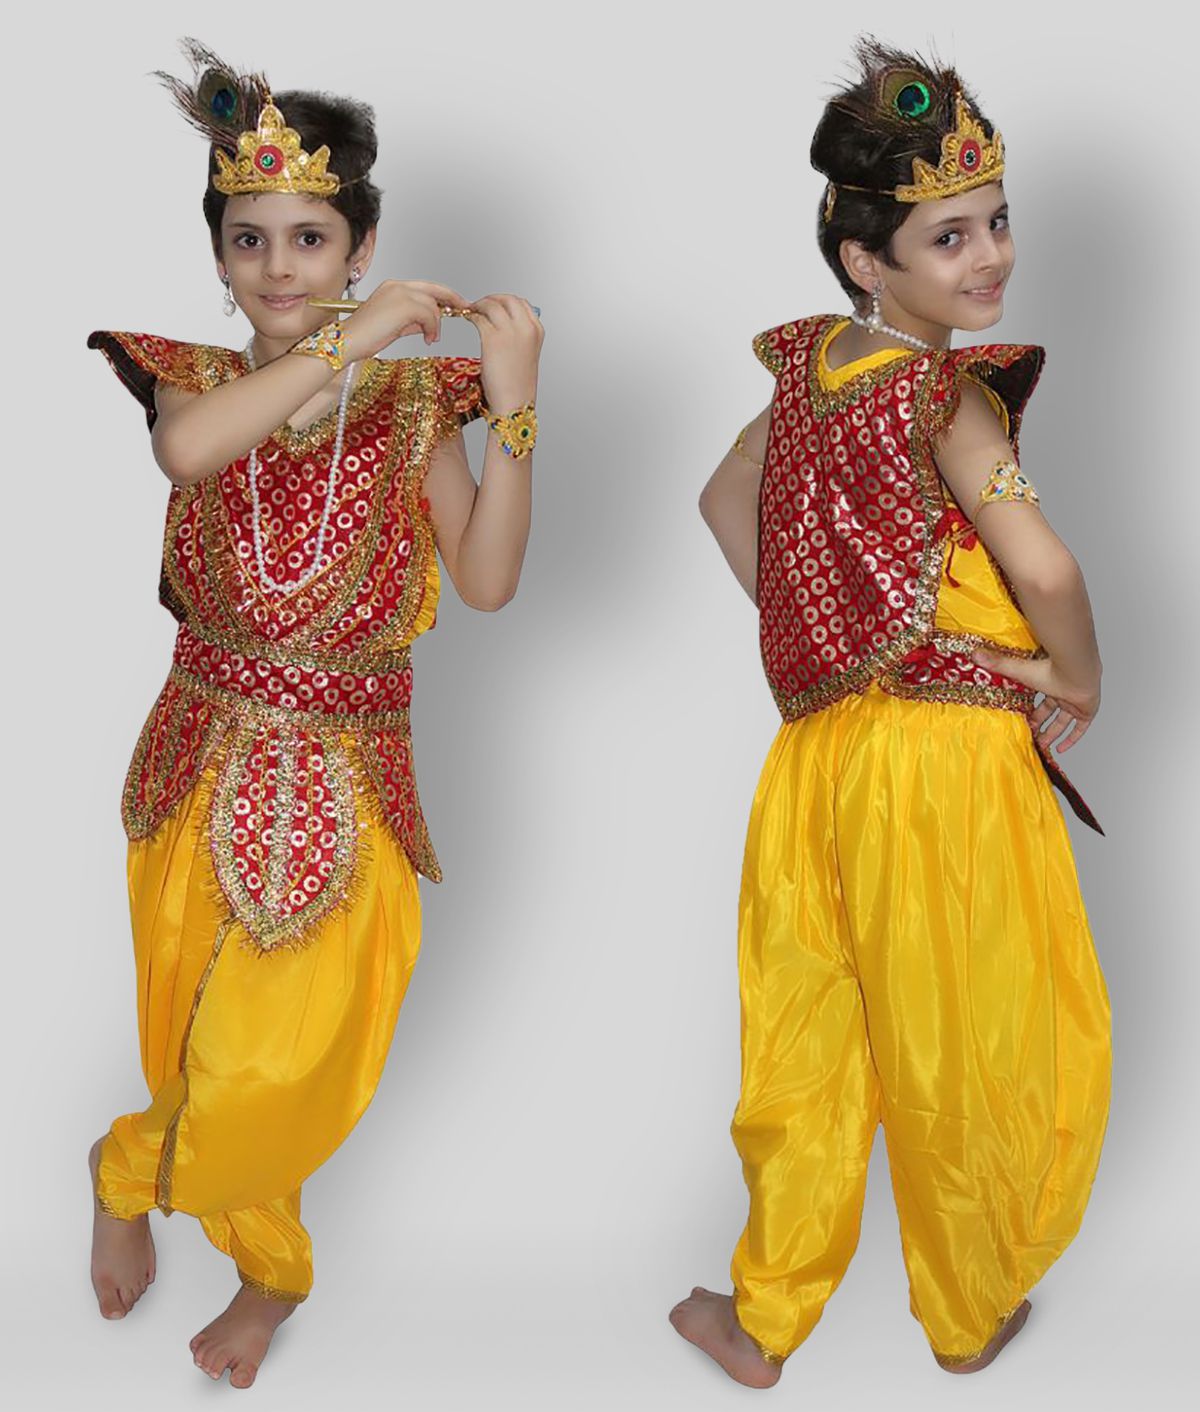     			Kaku Fancy Dresses Lord Krishna Costume For Kids Krishnaleela/Janmashtami/Kanha/Mythological Character For Kids School Annual function/Theme Party/Competition/Stage Shows Dress